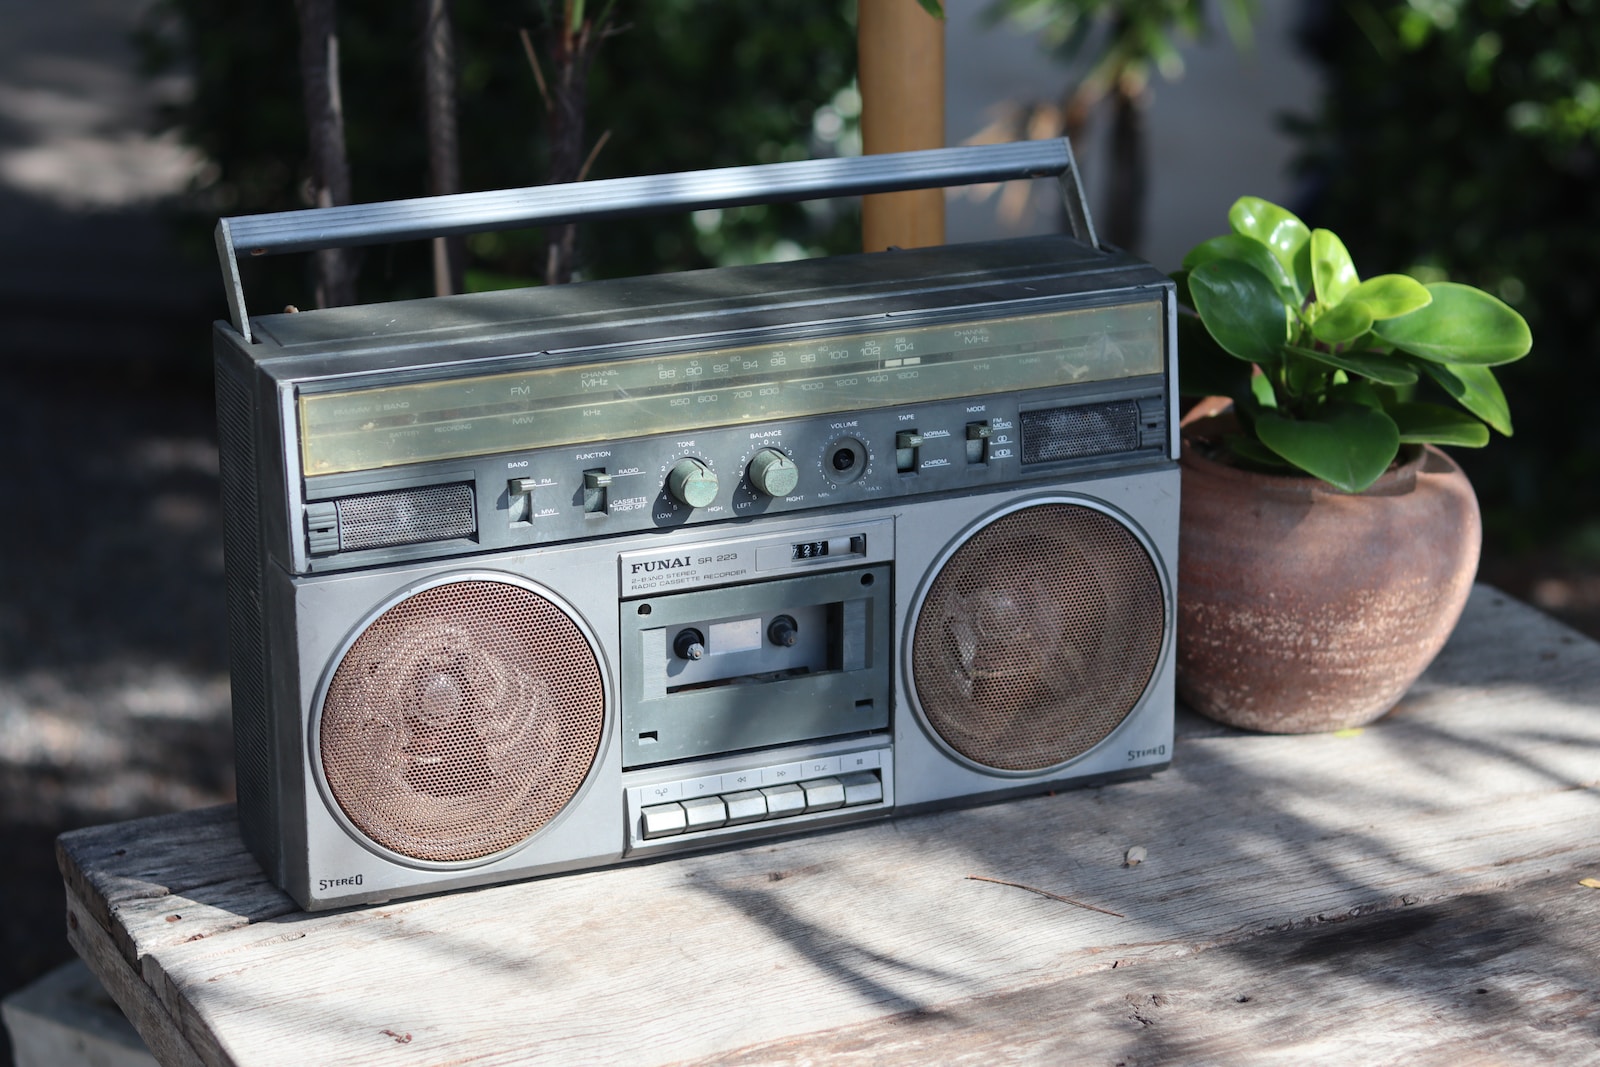 radio show, brown and black cassette radio